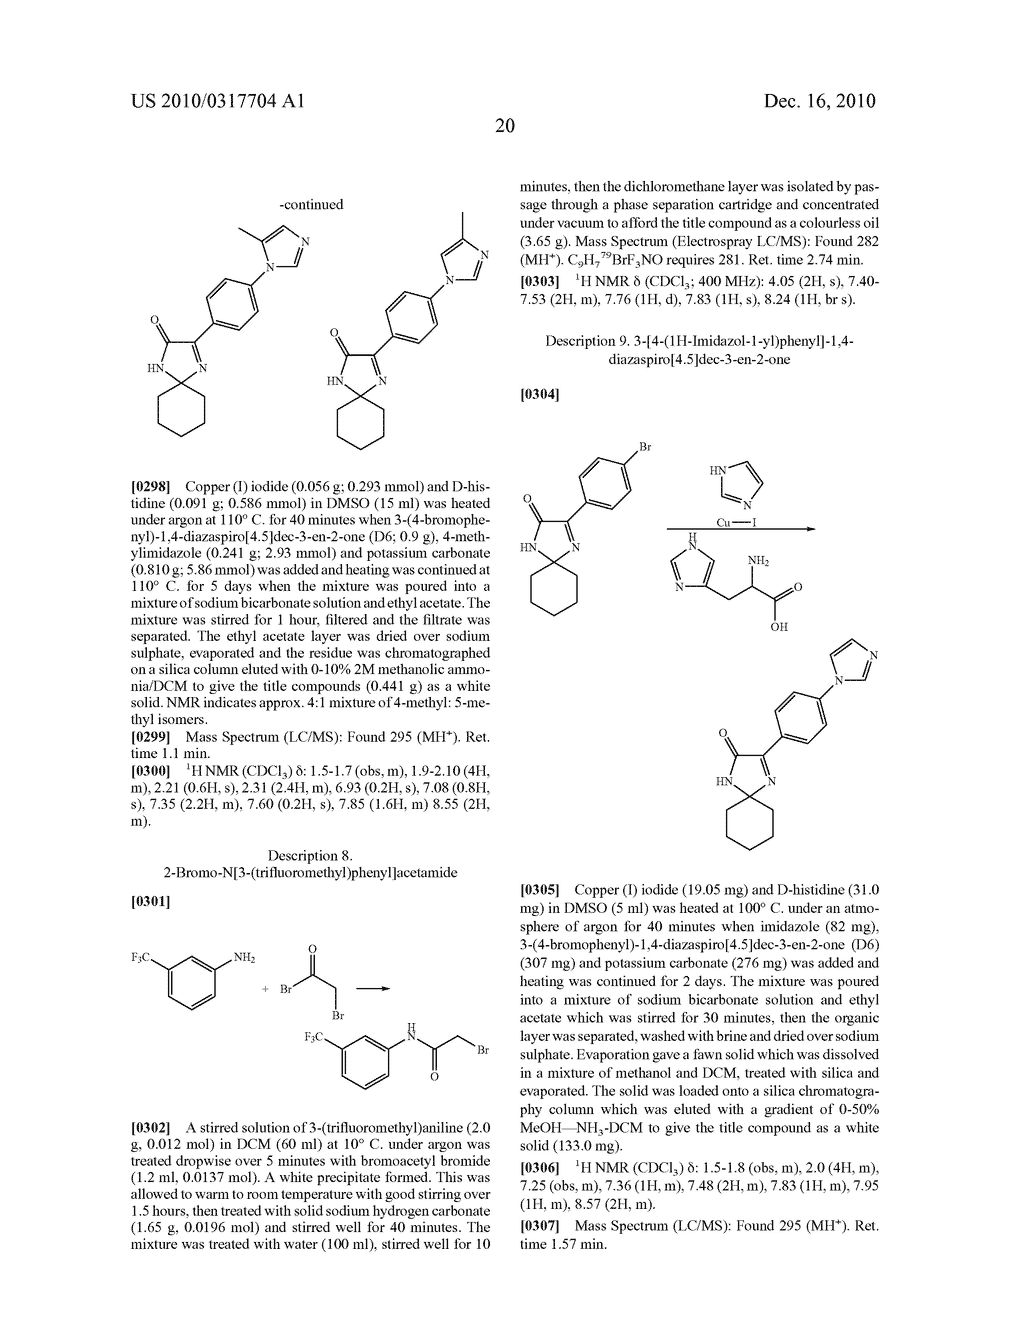 SPIRO-CONDENSED IMIDAZOLONE DERIVATIVES INHIBITING THE GLYCINE TRANSPORTER - diagram, schematic, and image 21